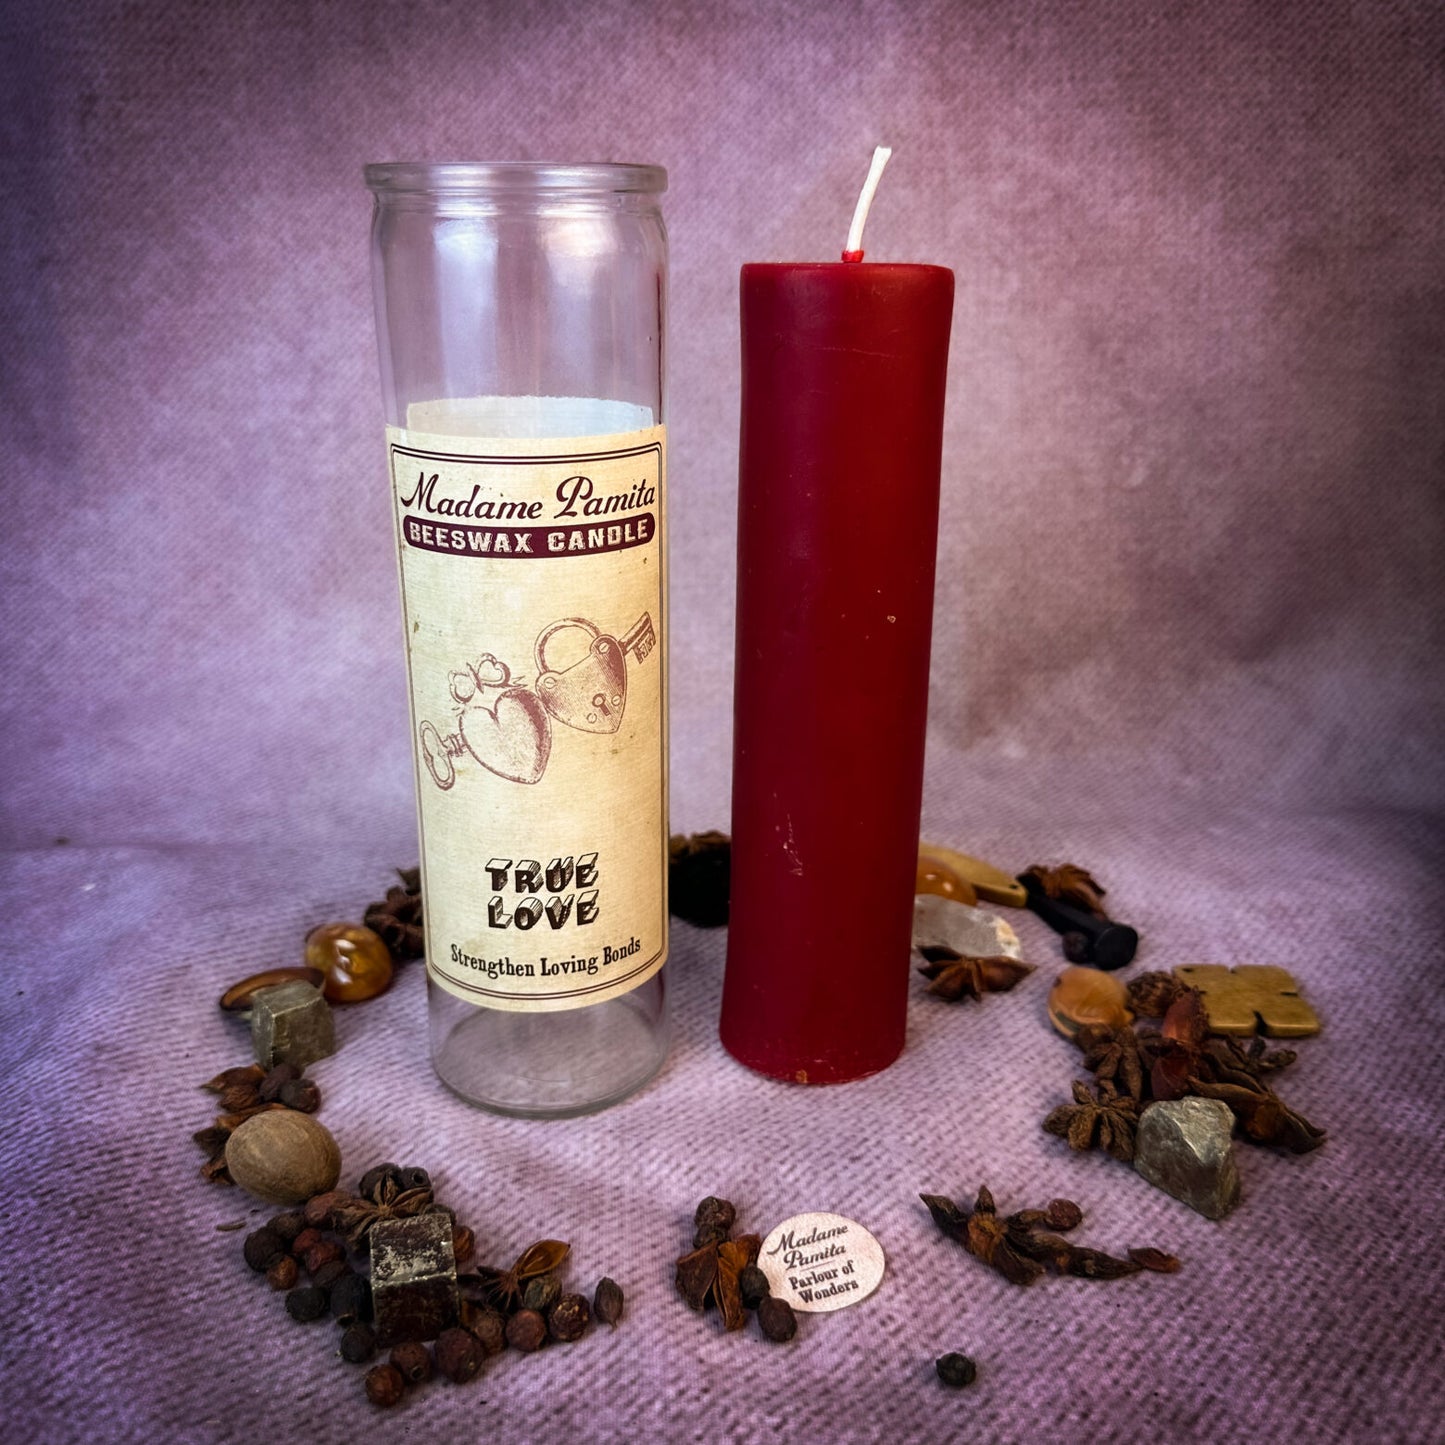 Madame Pamita True Love Beeswax Vigil Candle